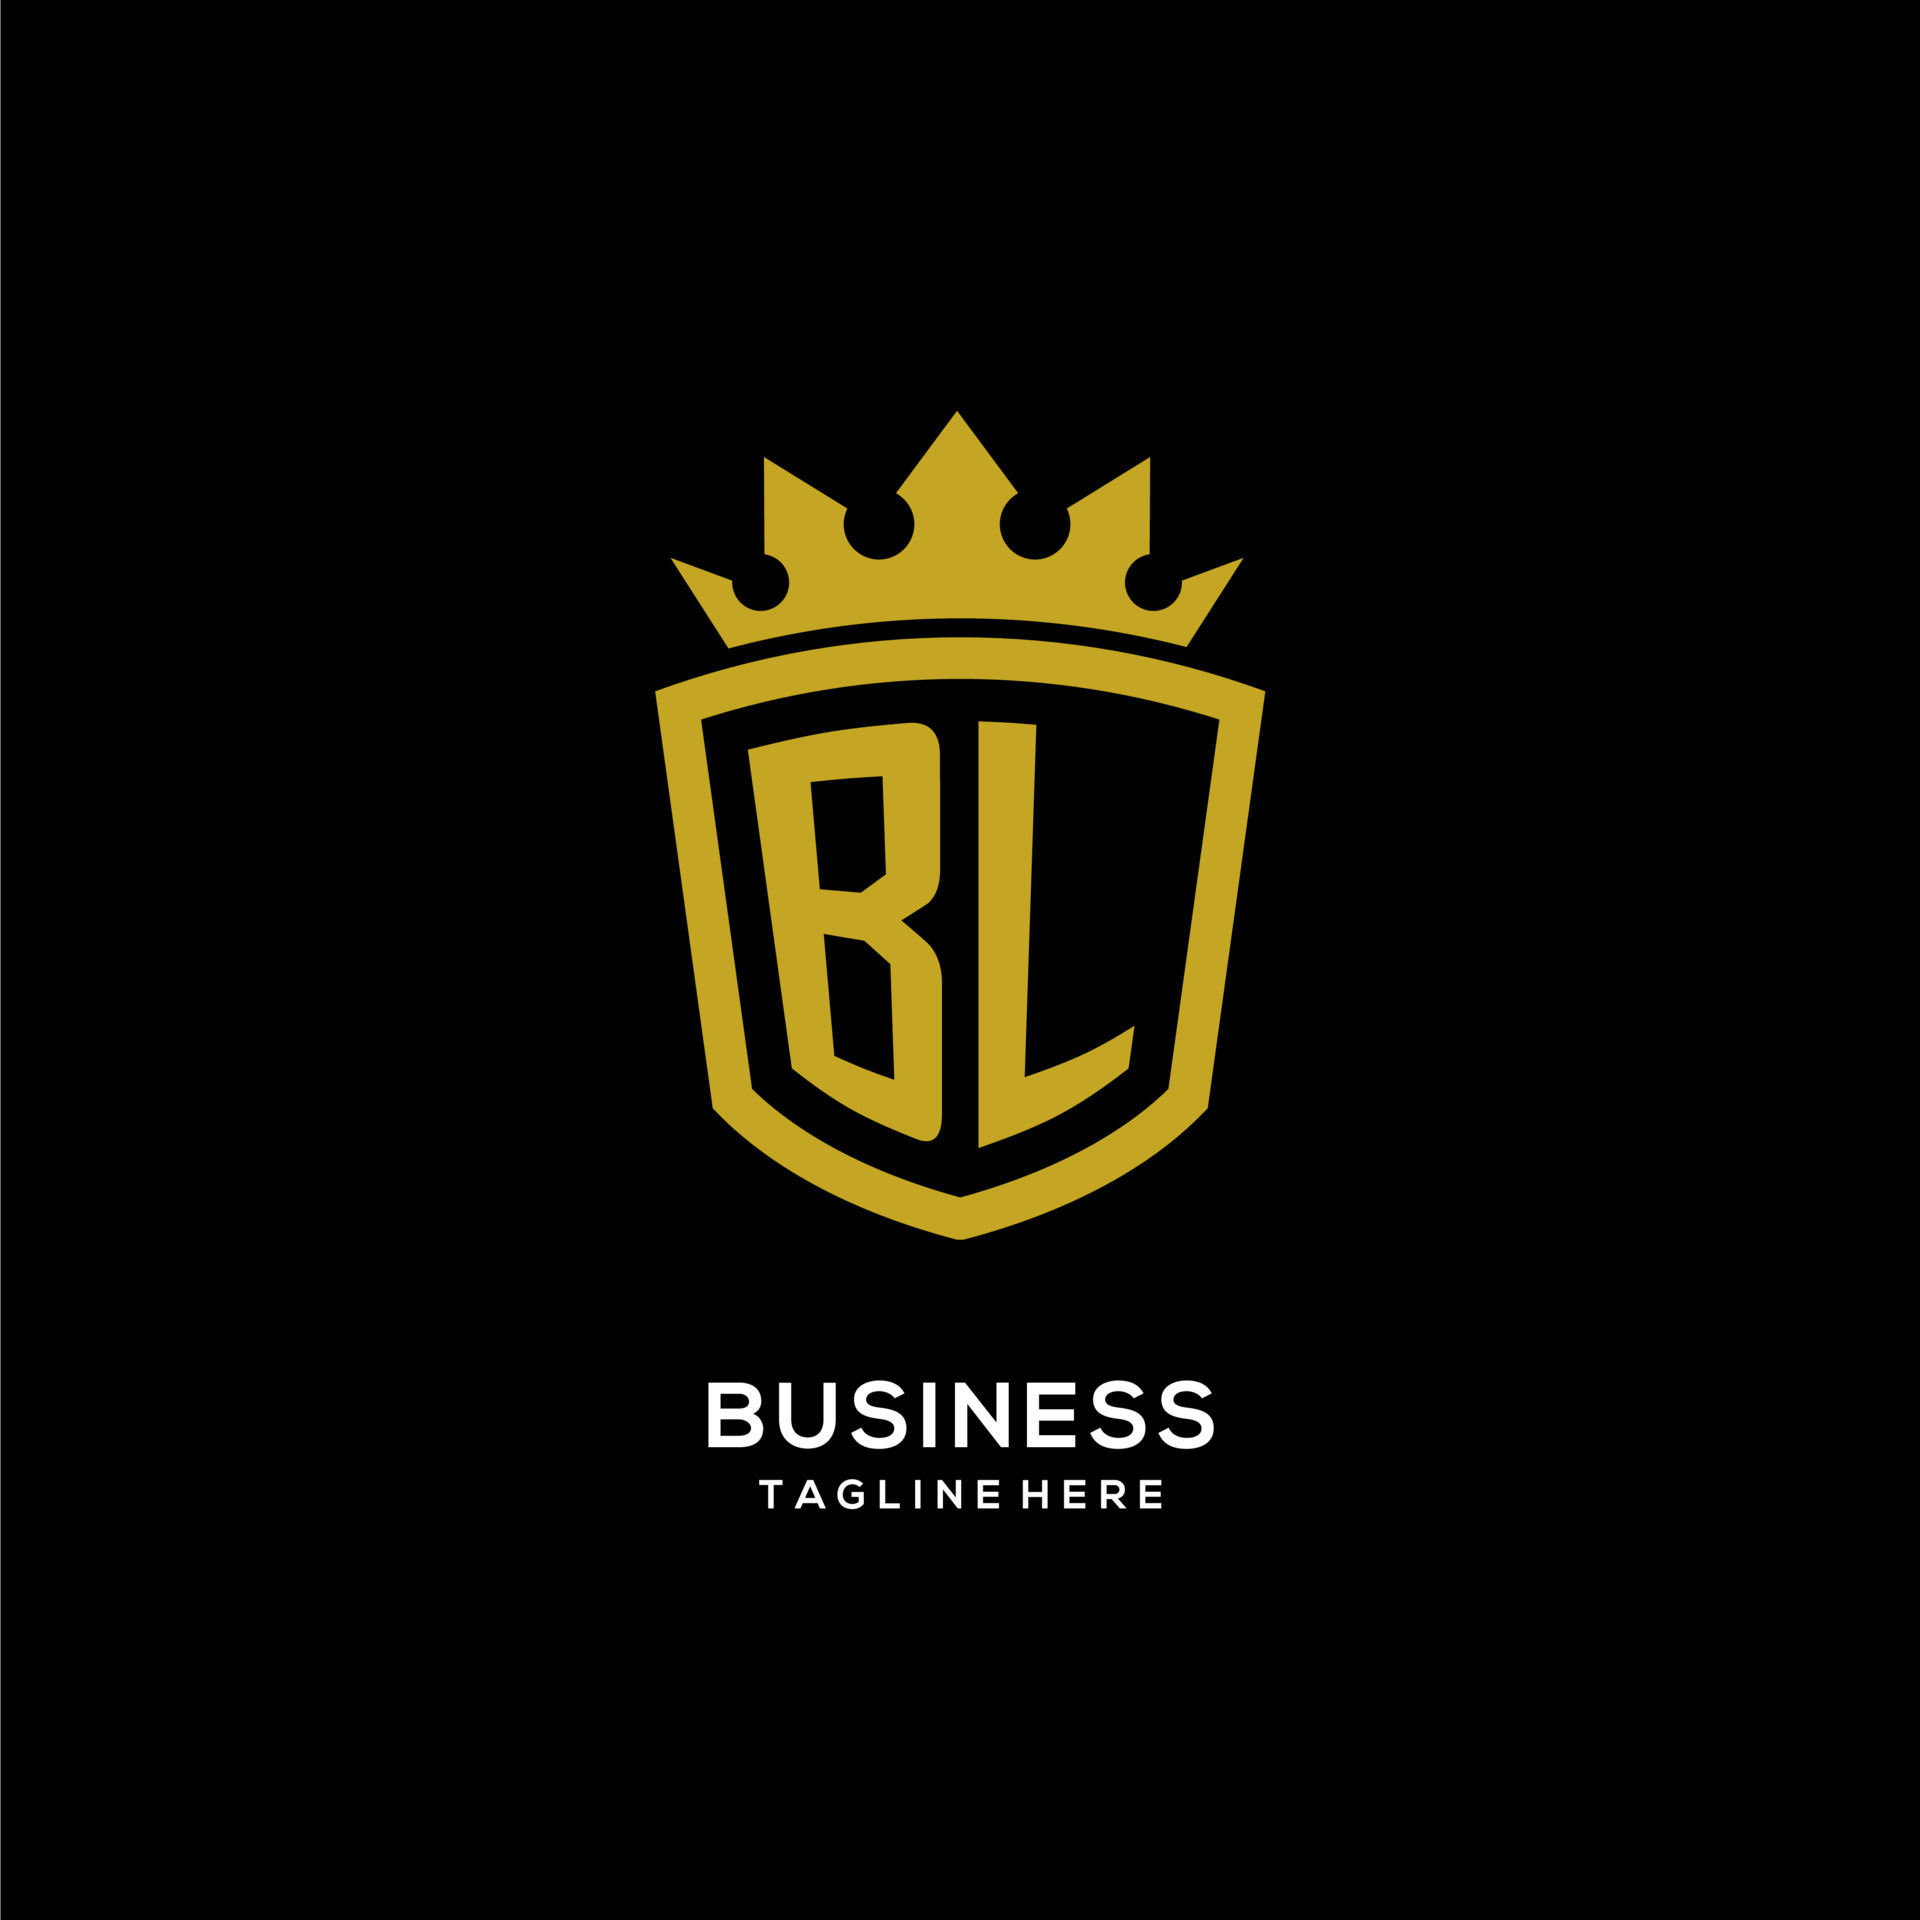 initial-bl-logo-shield-crown-style-luxury-elegant-monogram-logo-design